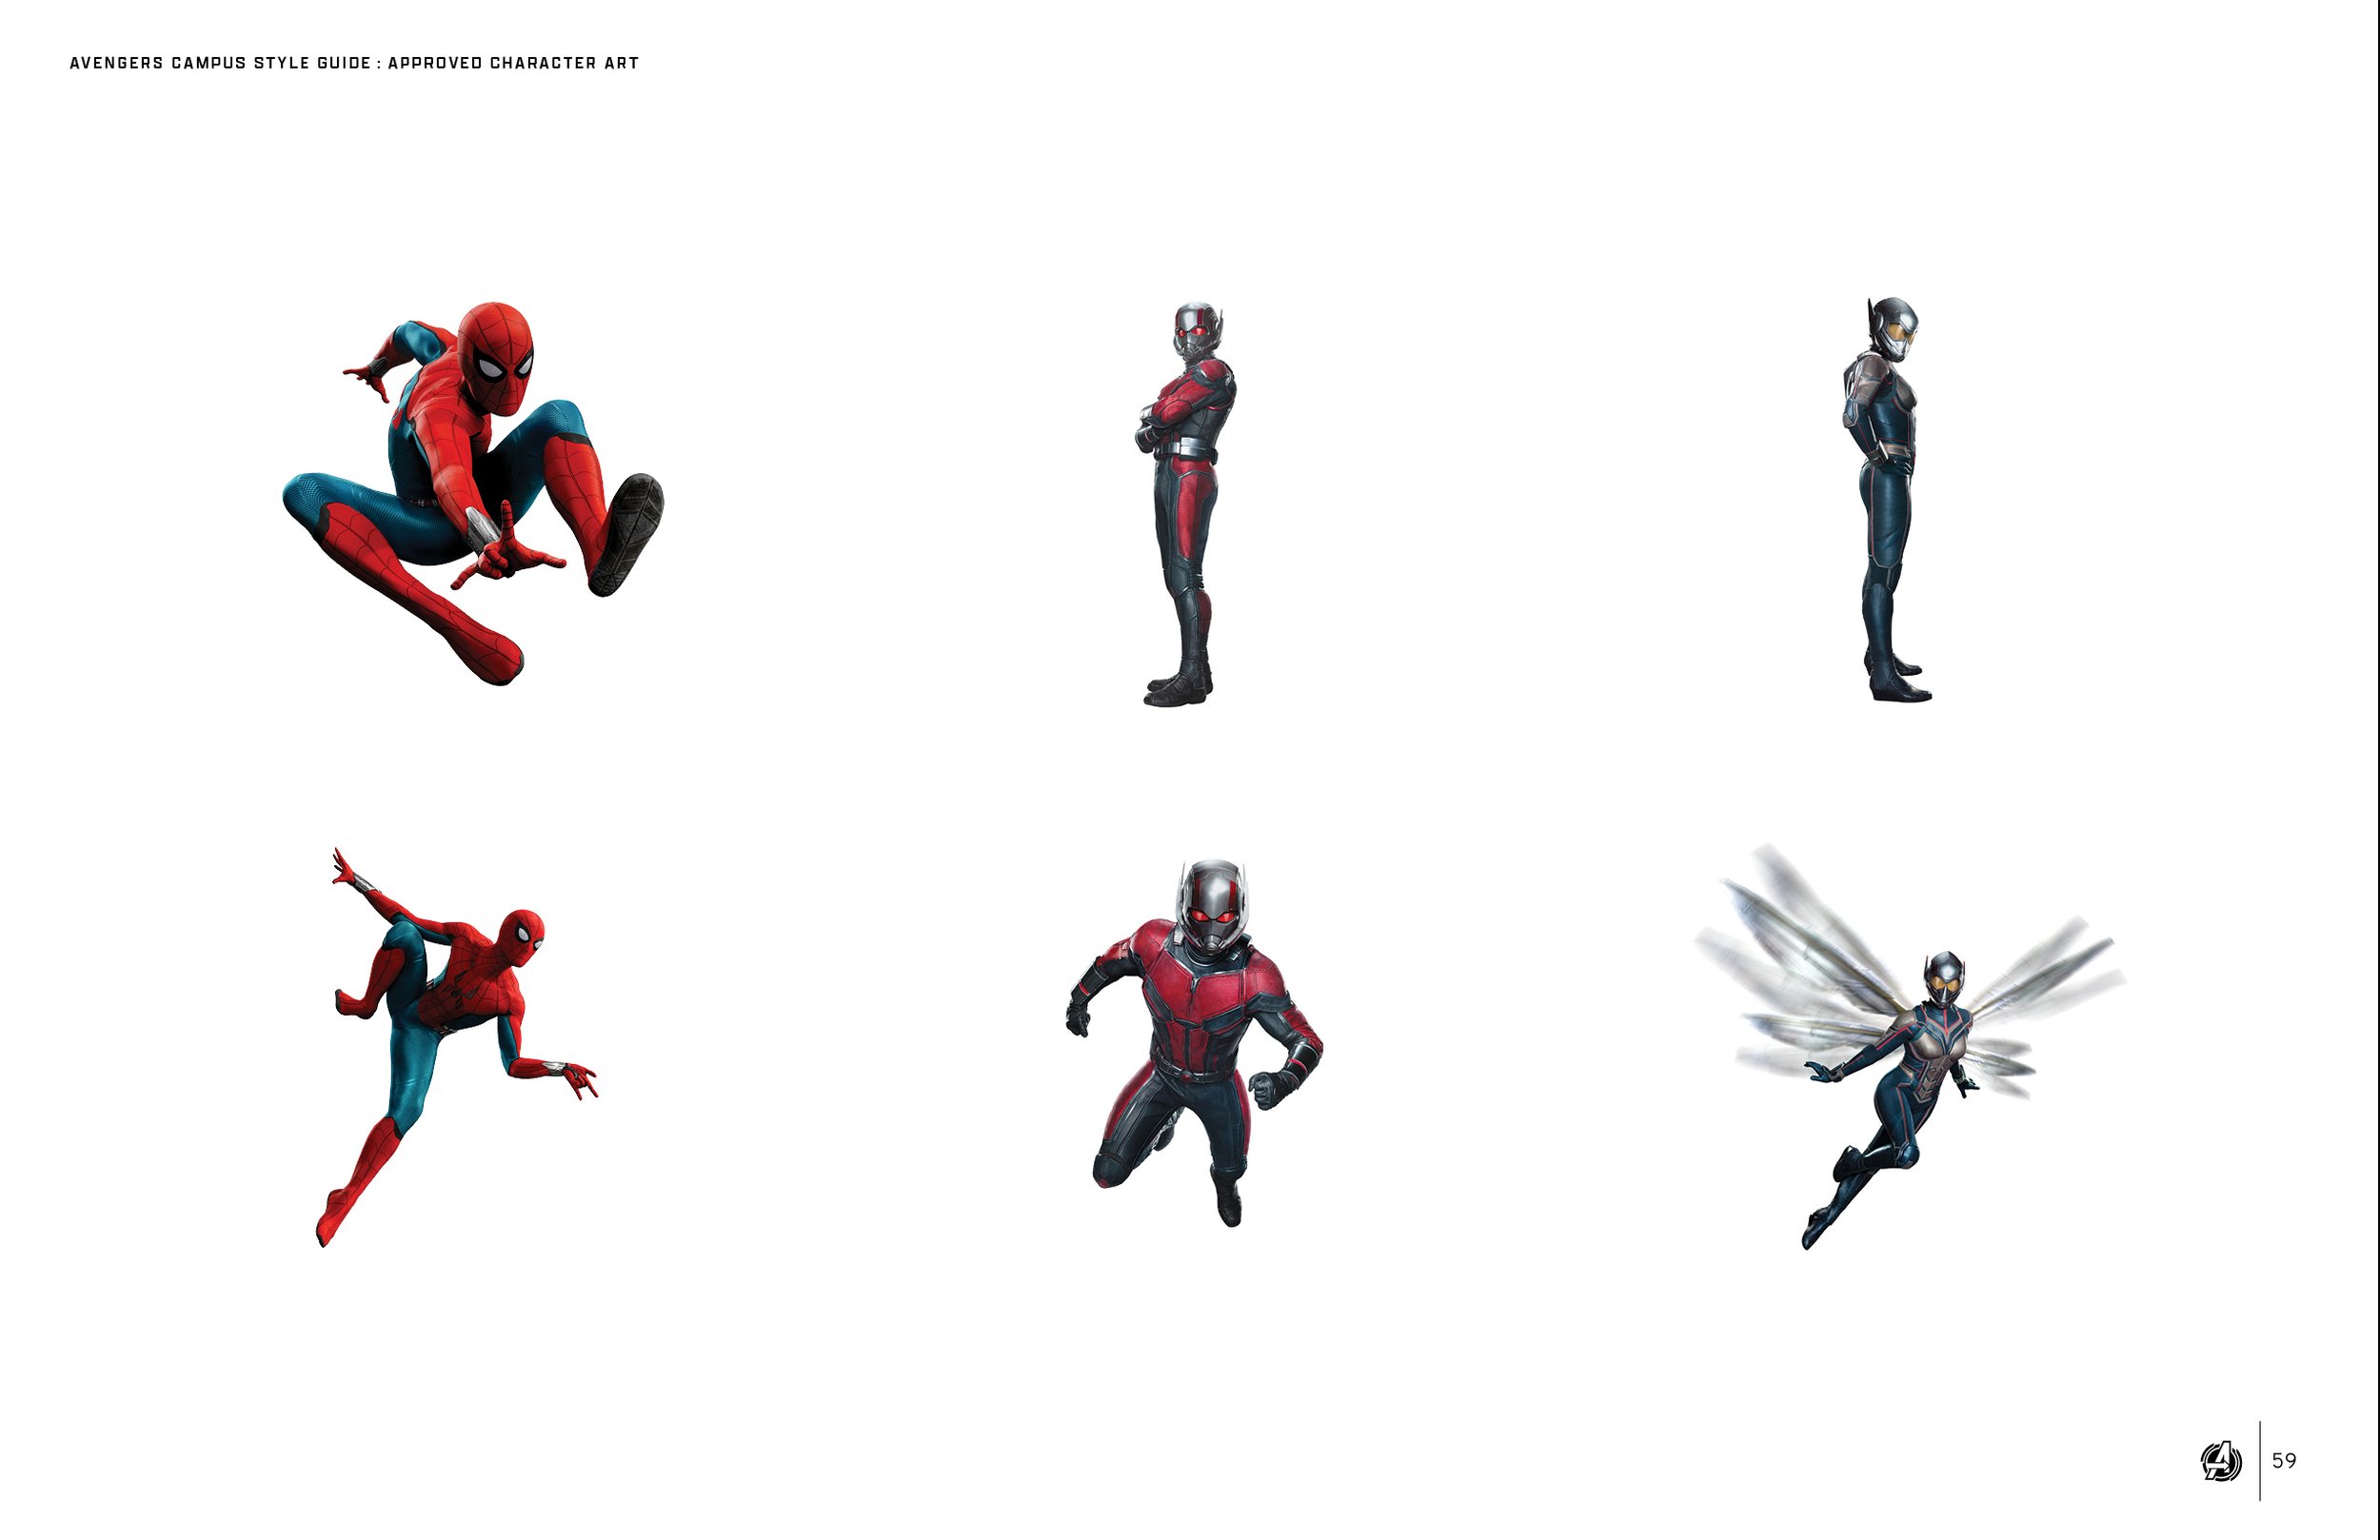 AvengersCampus_StyleGuide_Website_59.jpg